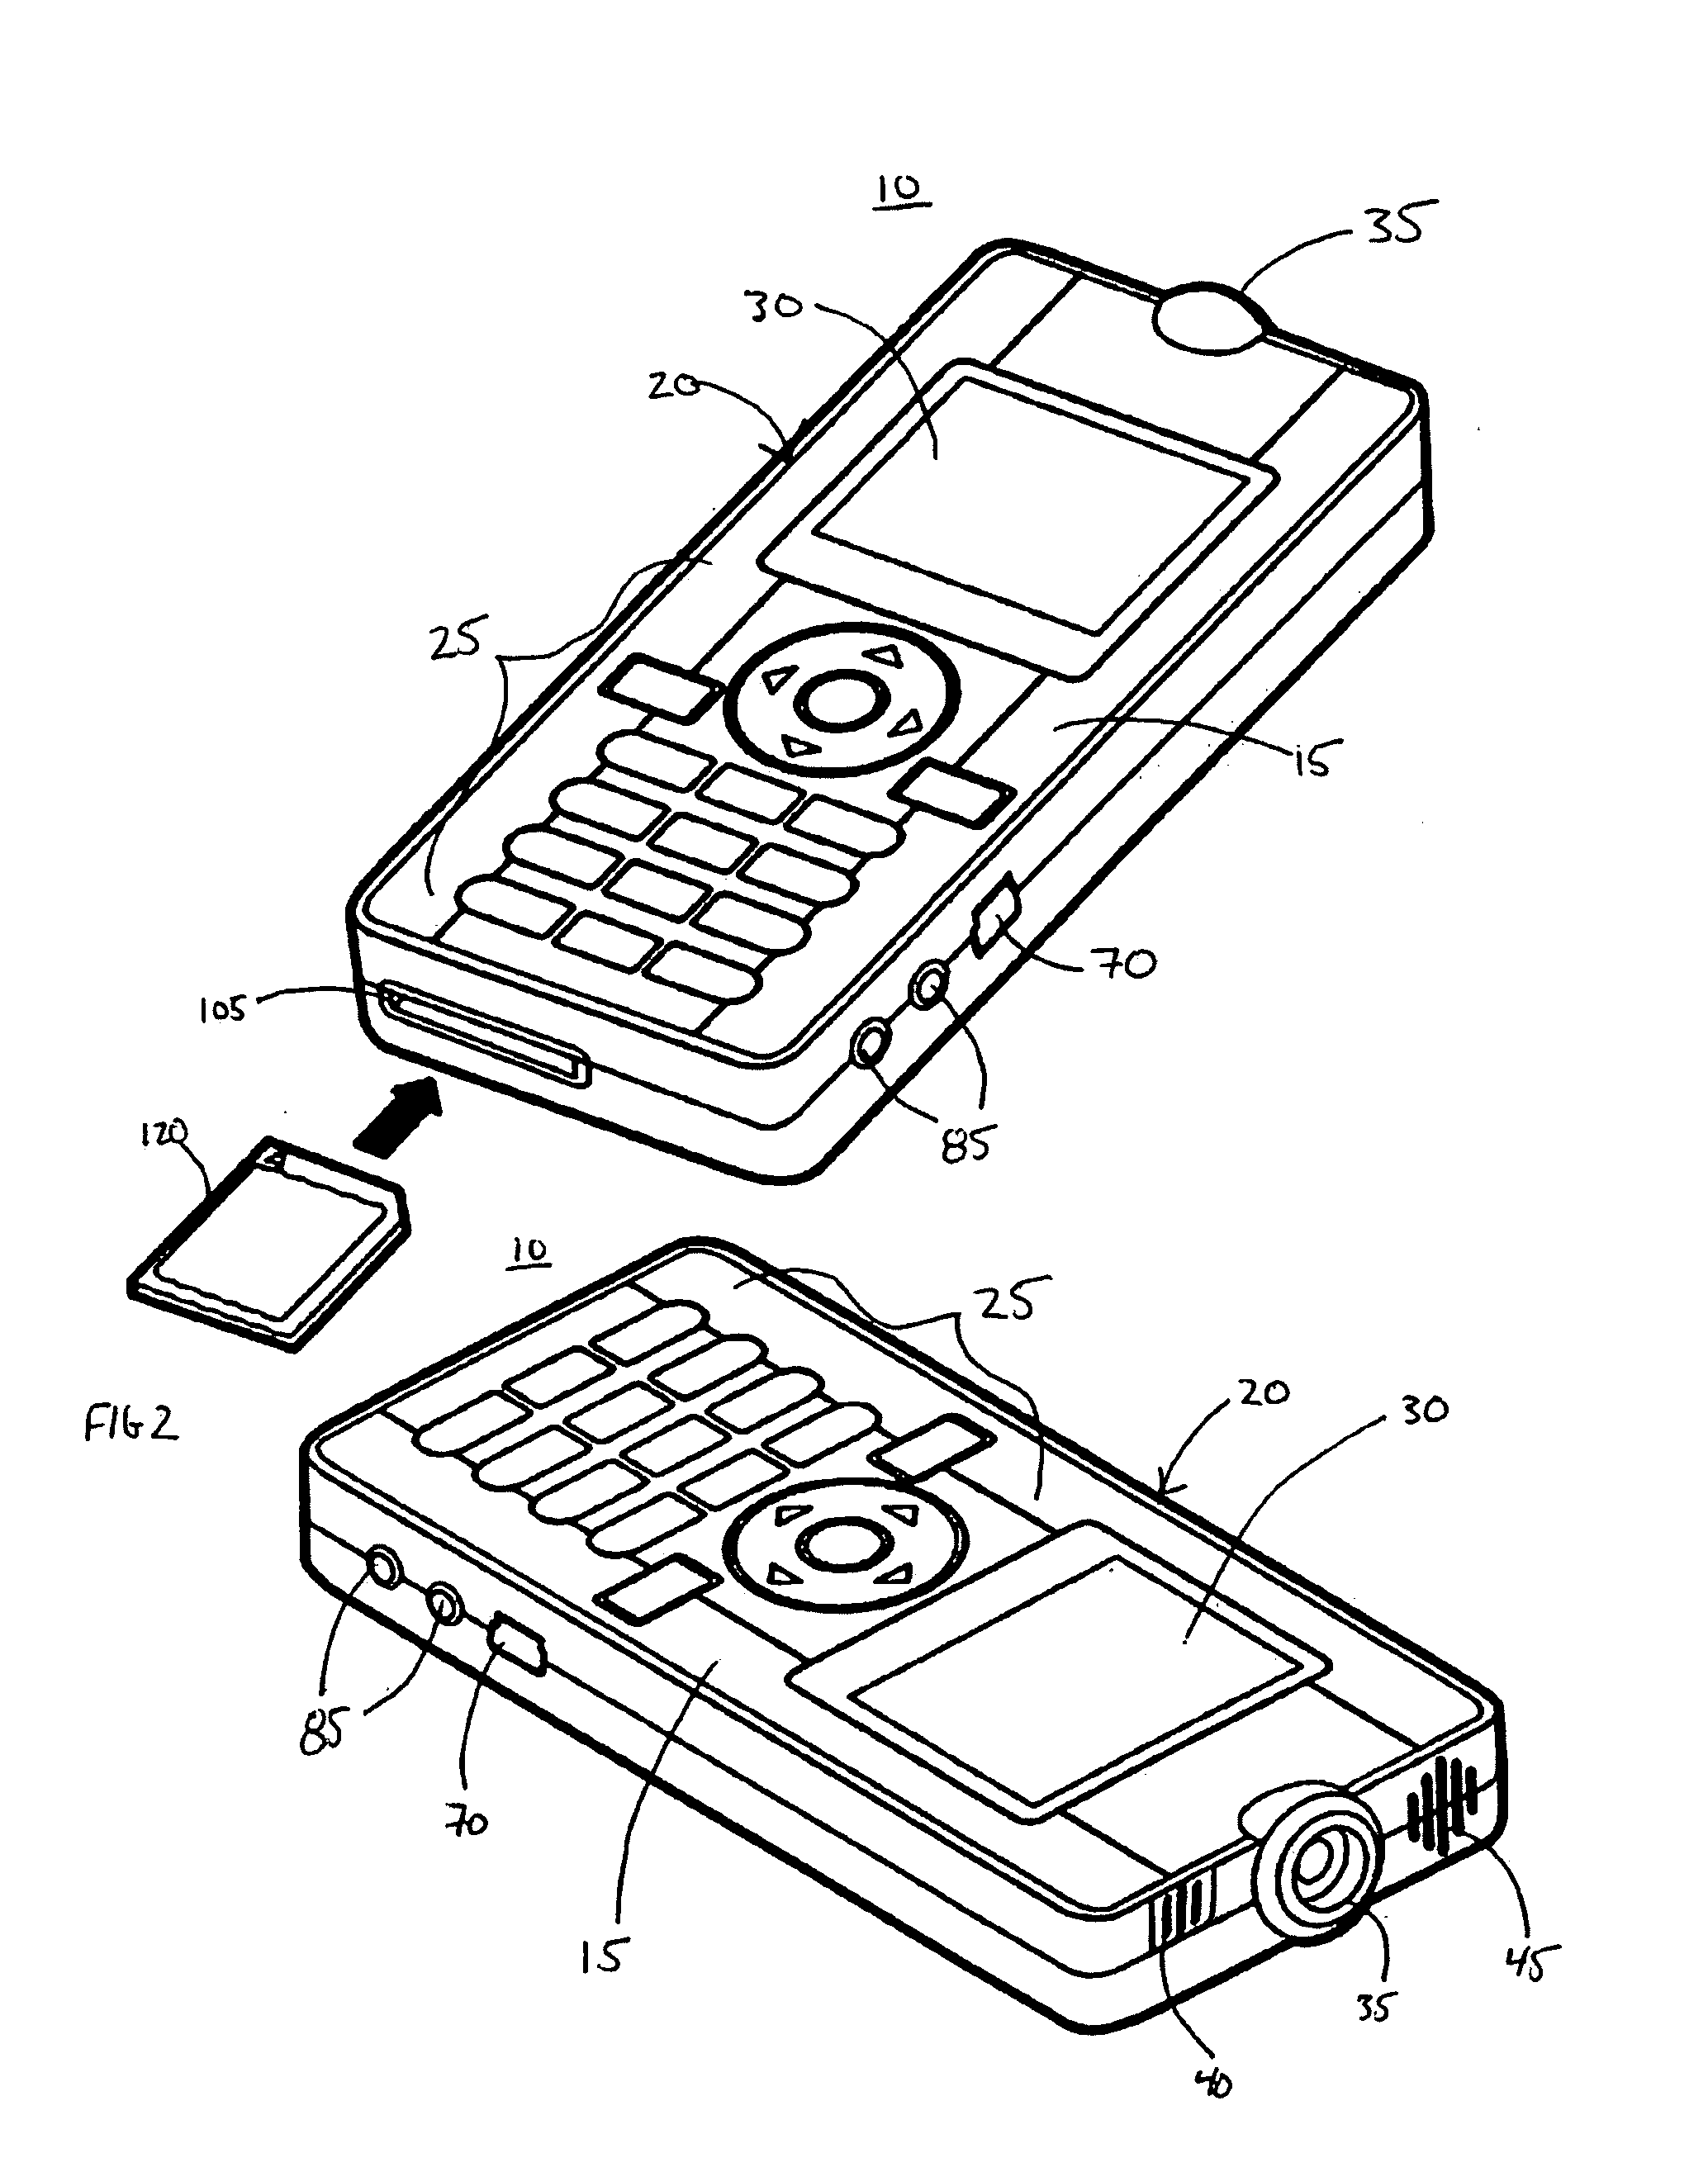 Portable multi-media device